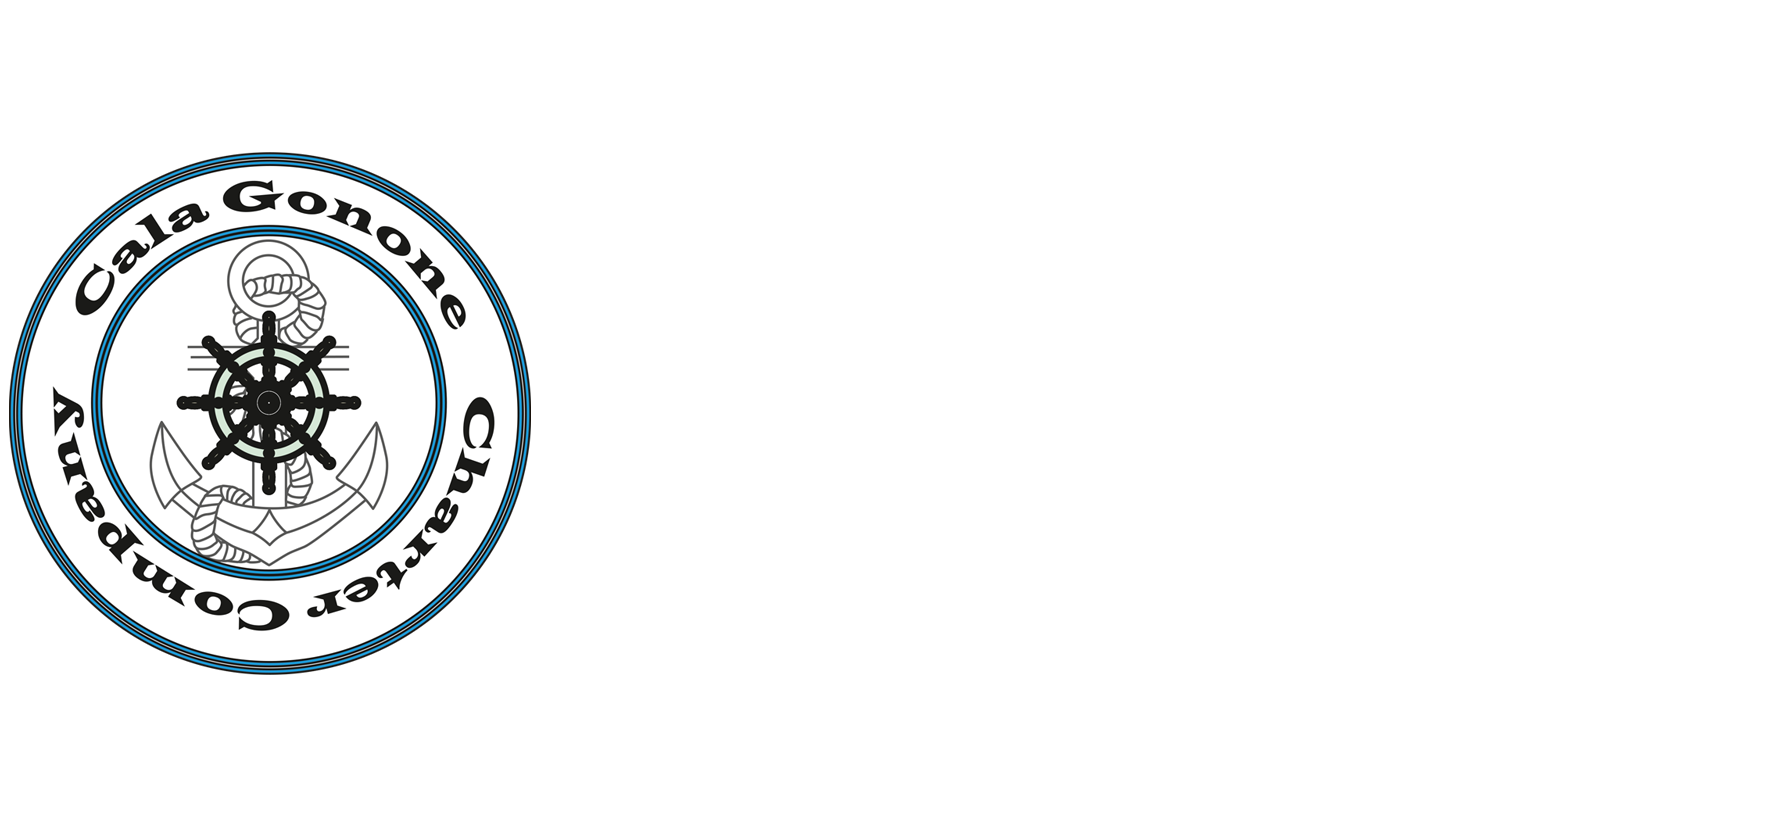 Cala Gonone Charter Company